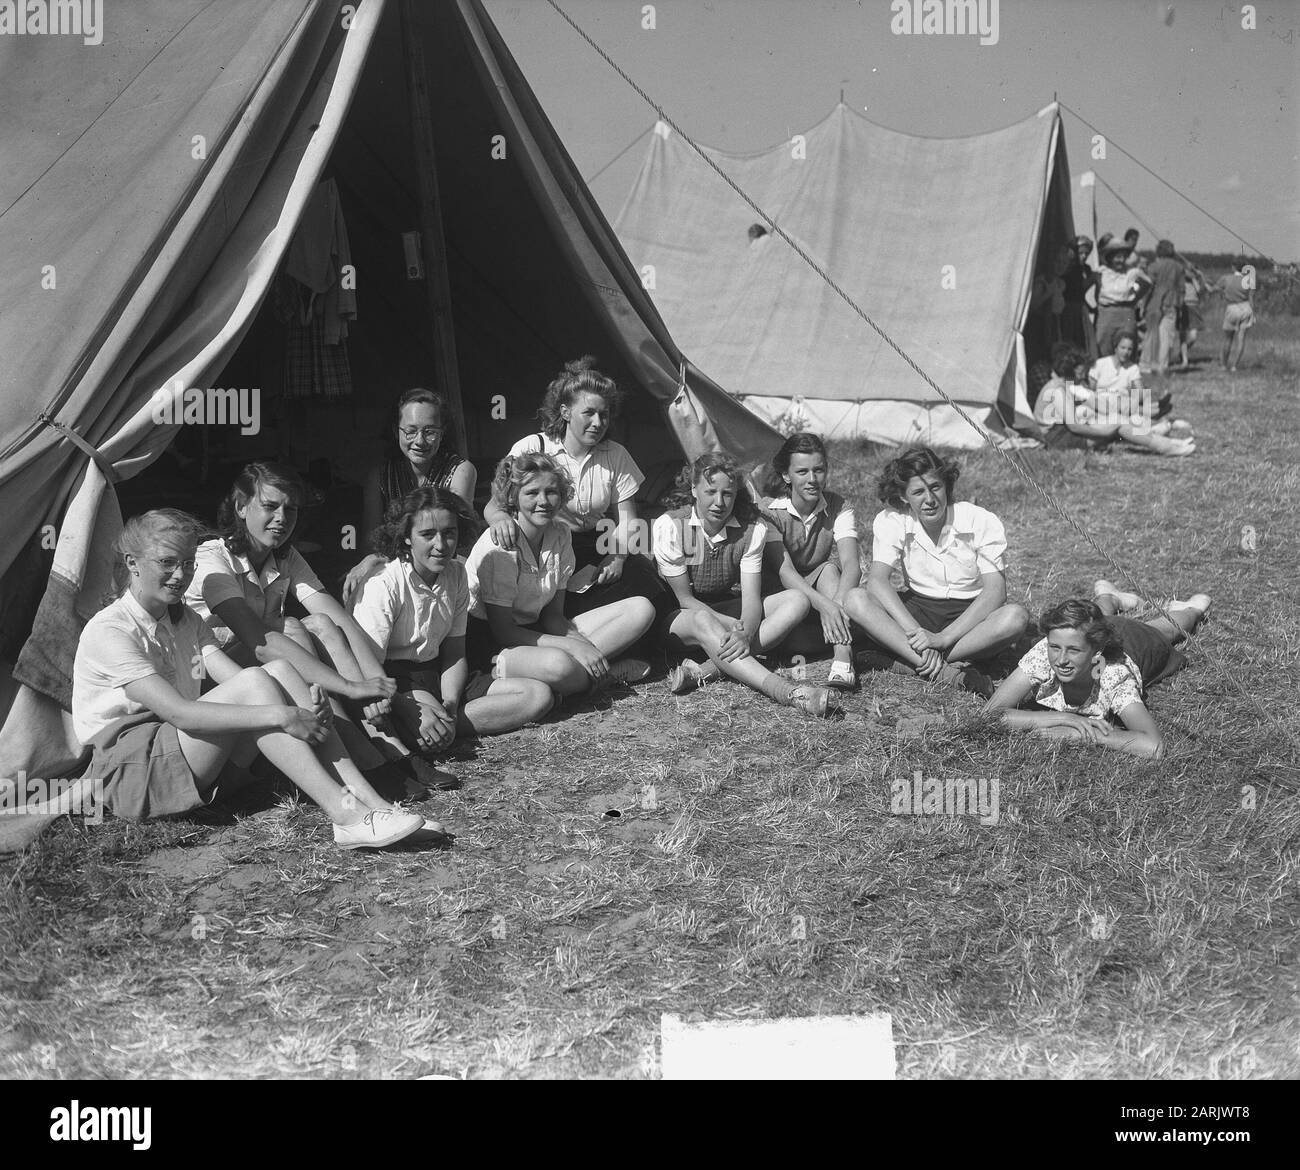 Kamp VCJC Renesse Data: 29 luglio 1949 luogo: Renesse, Schouwen-Duiveland, Zeeland Parole Chiave: Organizzazioni giovanili, campeggio, ragazze Foto Stock